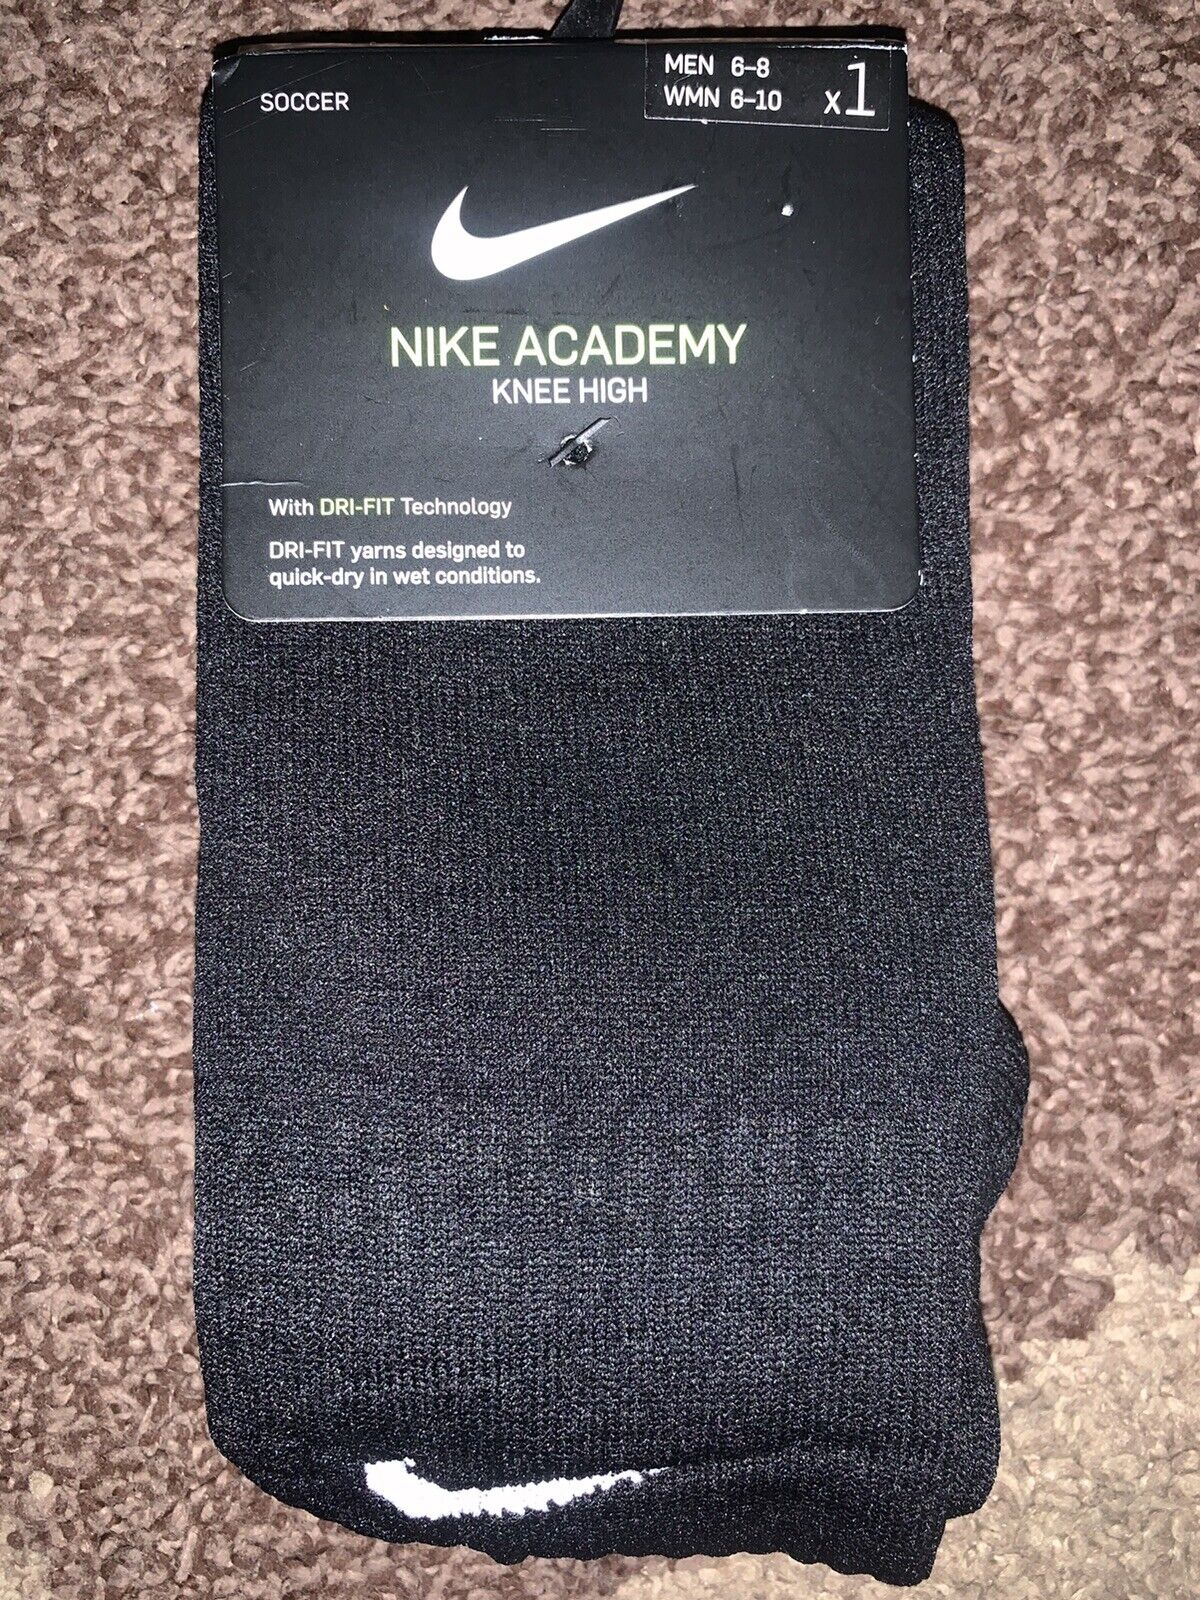 Nwt Nike Academy Dri-fit Knee High Soccer Socks Unisex Med M:6-8 W: 6-10 Black